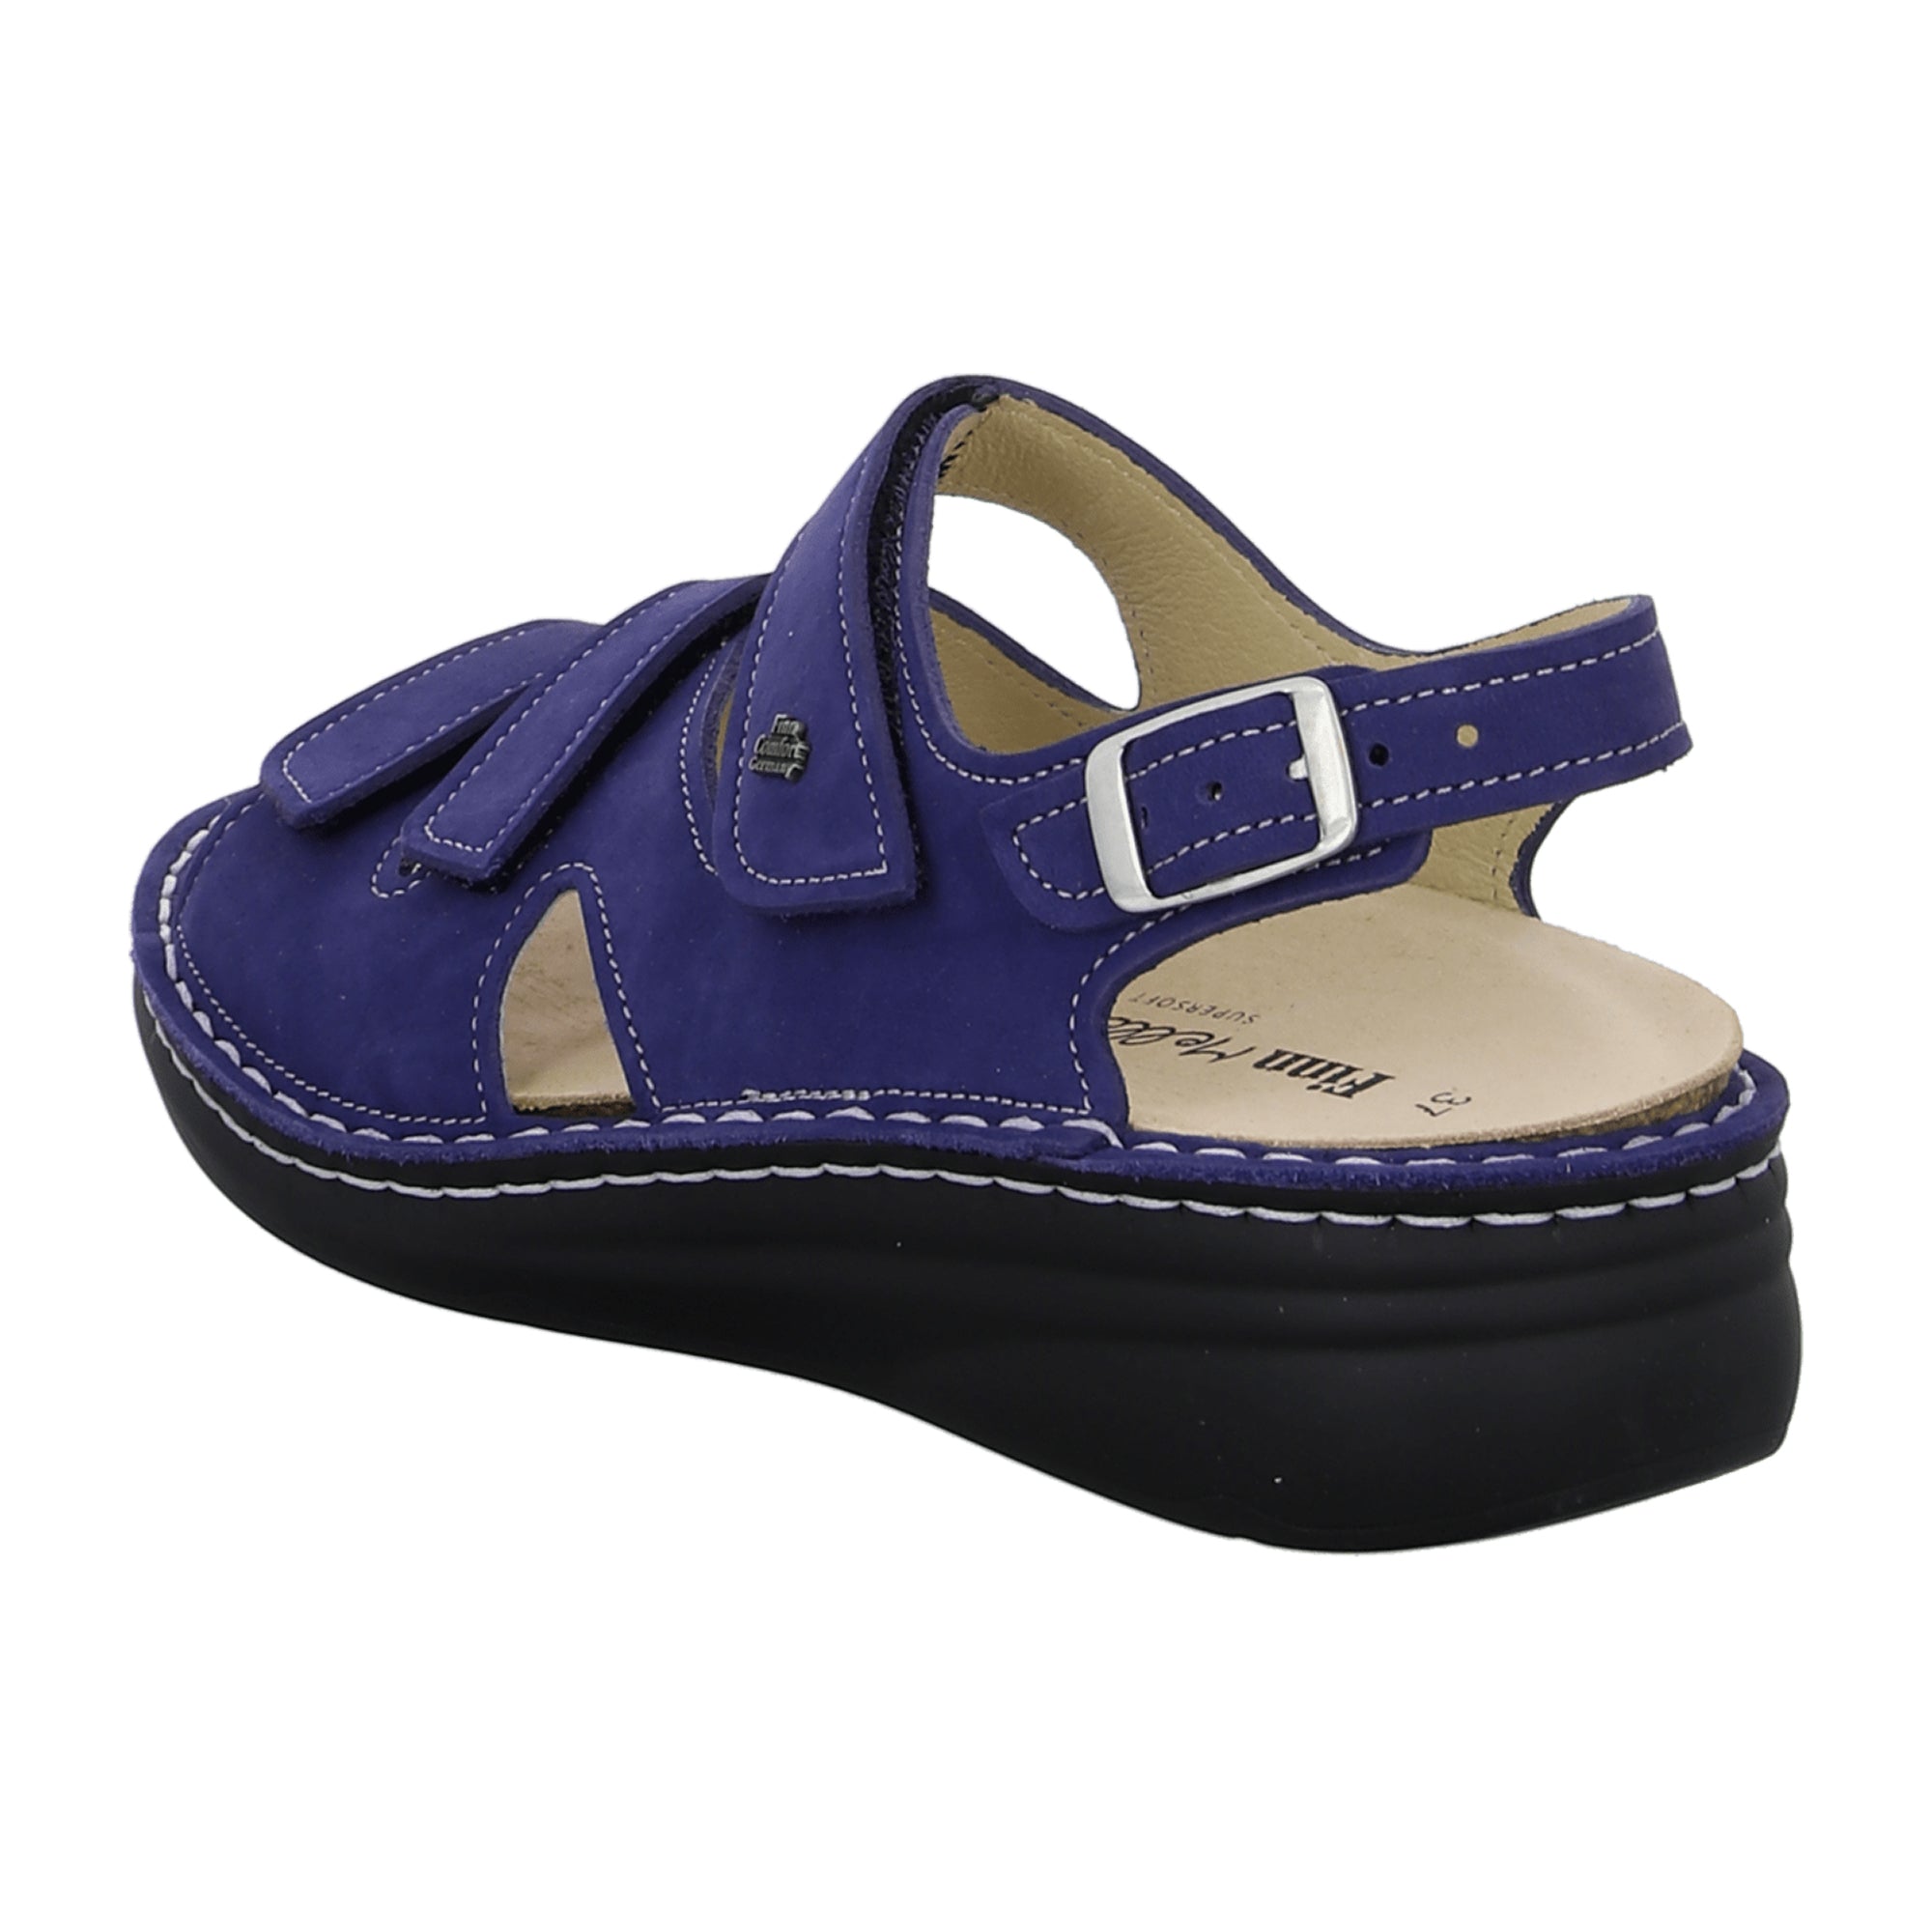 Finn Comfort Praia Women's Comfort Sandals, Stylish Blue